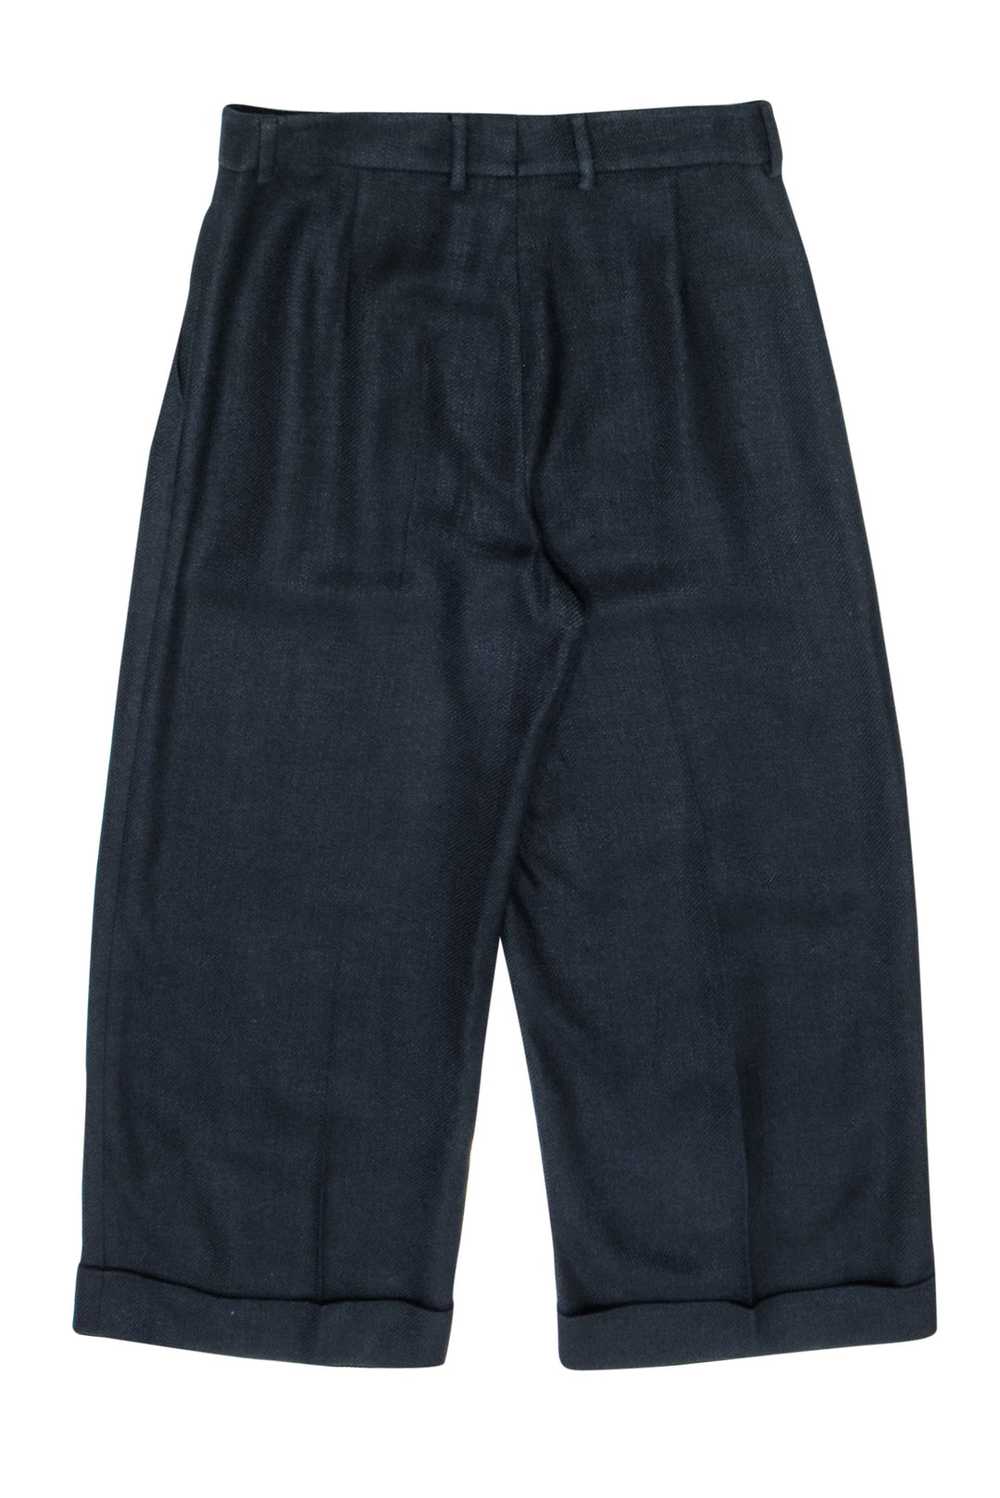 Akris - Black Cropped Wool Pleated Pants w/ Cuff … - image 2